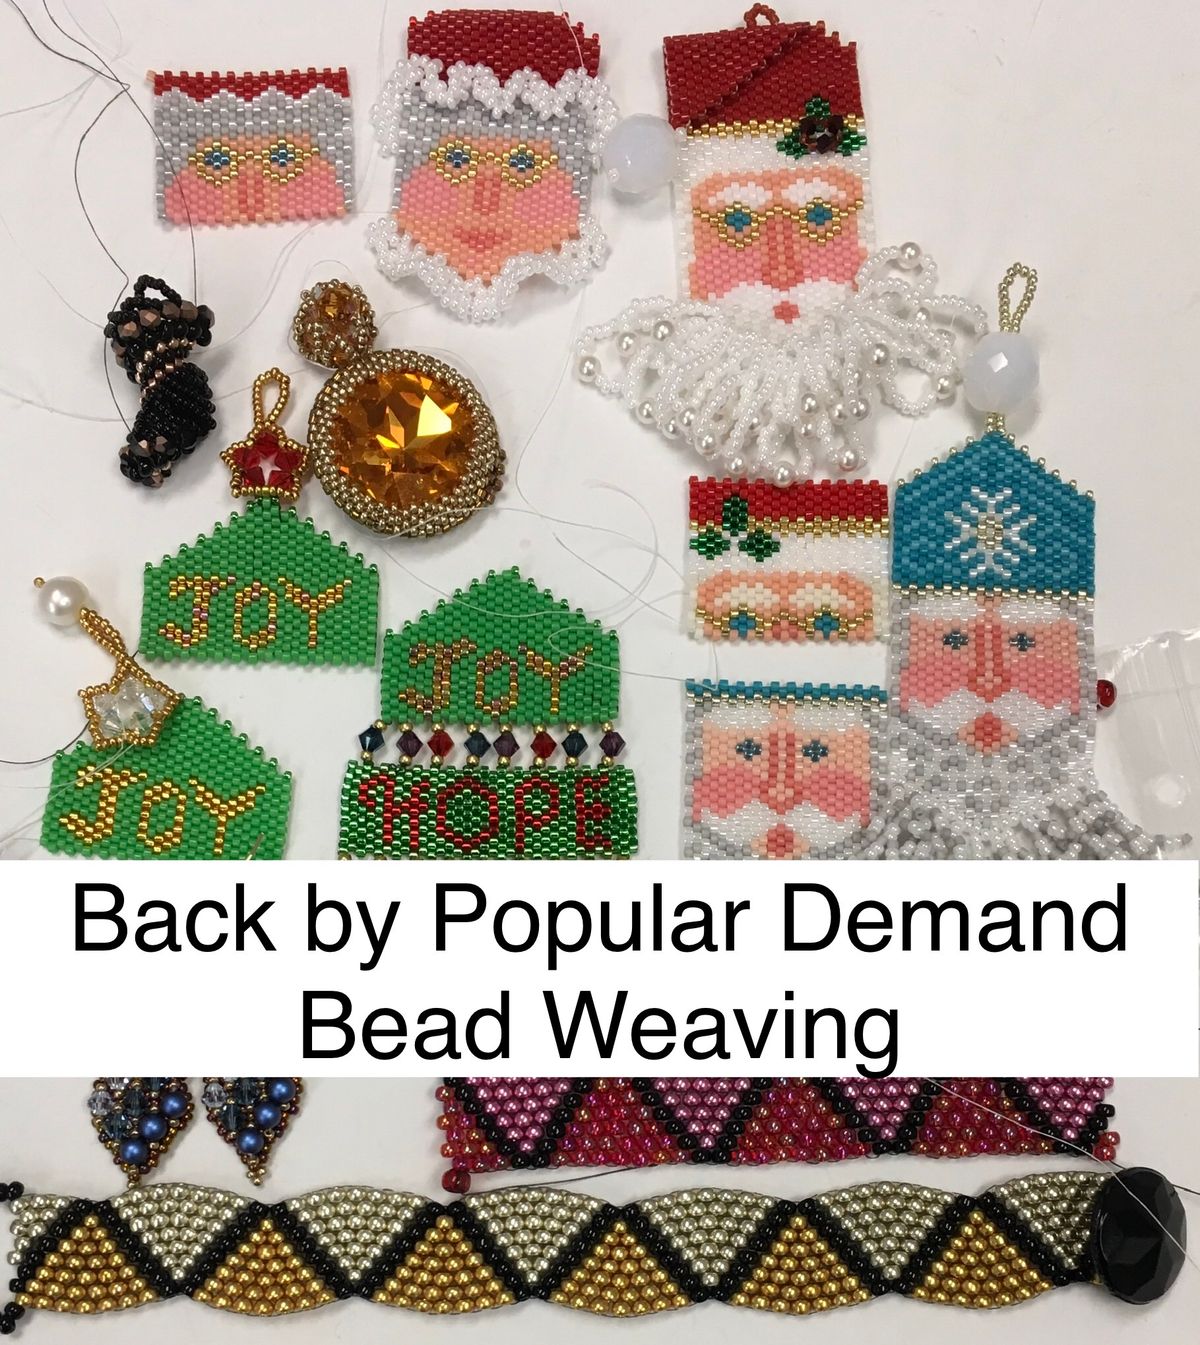 Back By Popular Demand - Bead Weaving